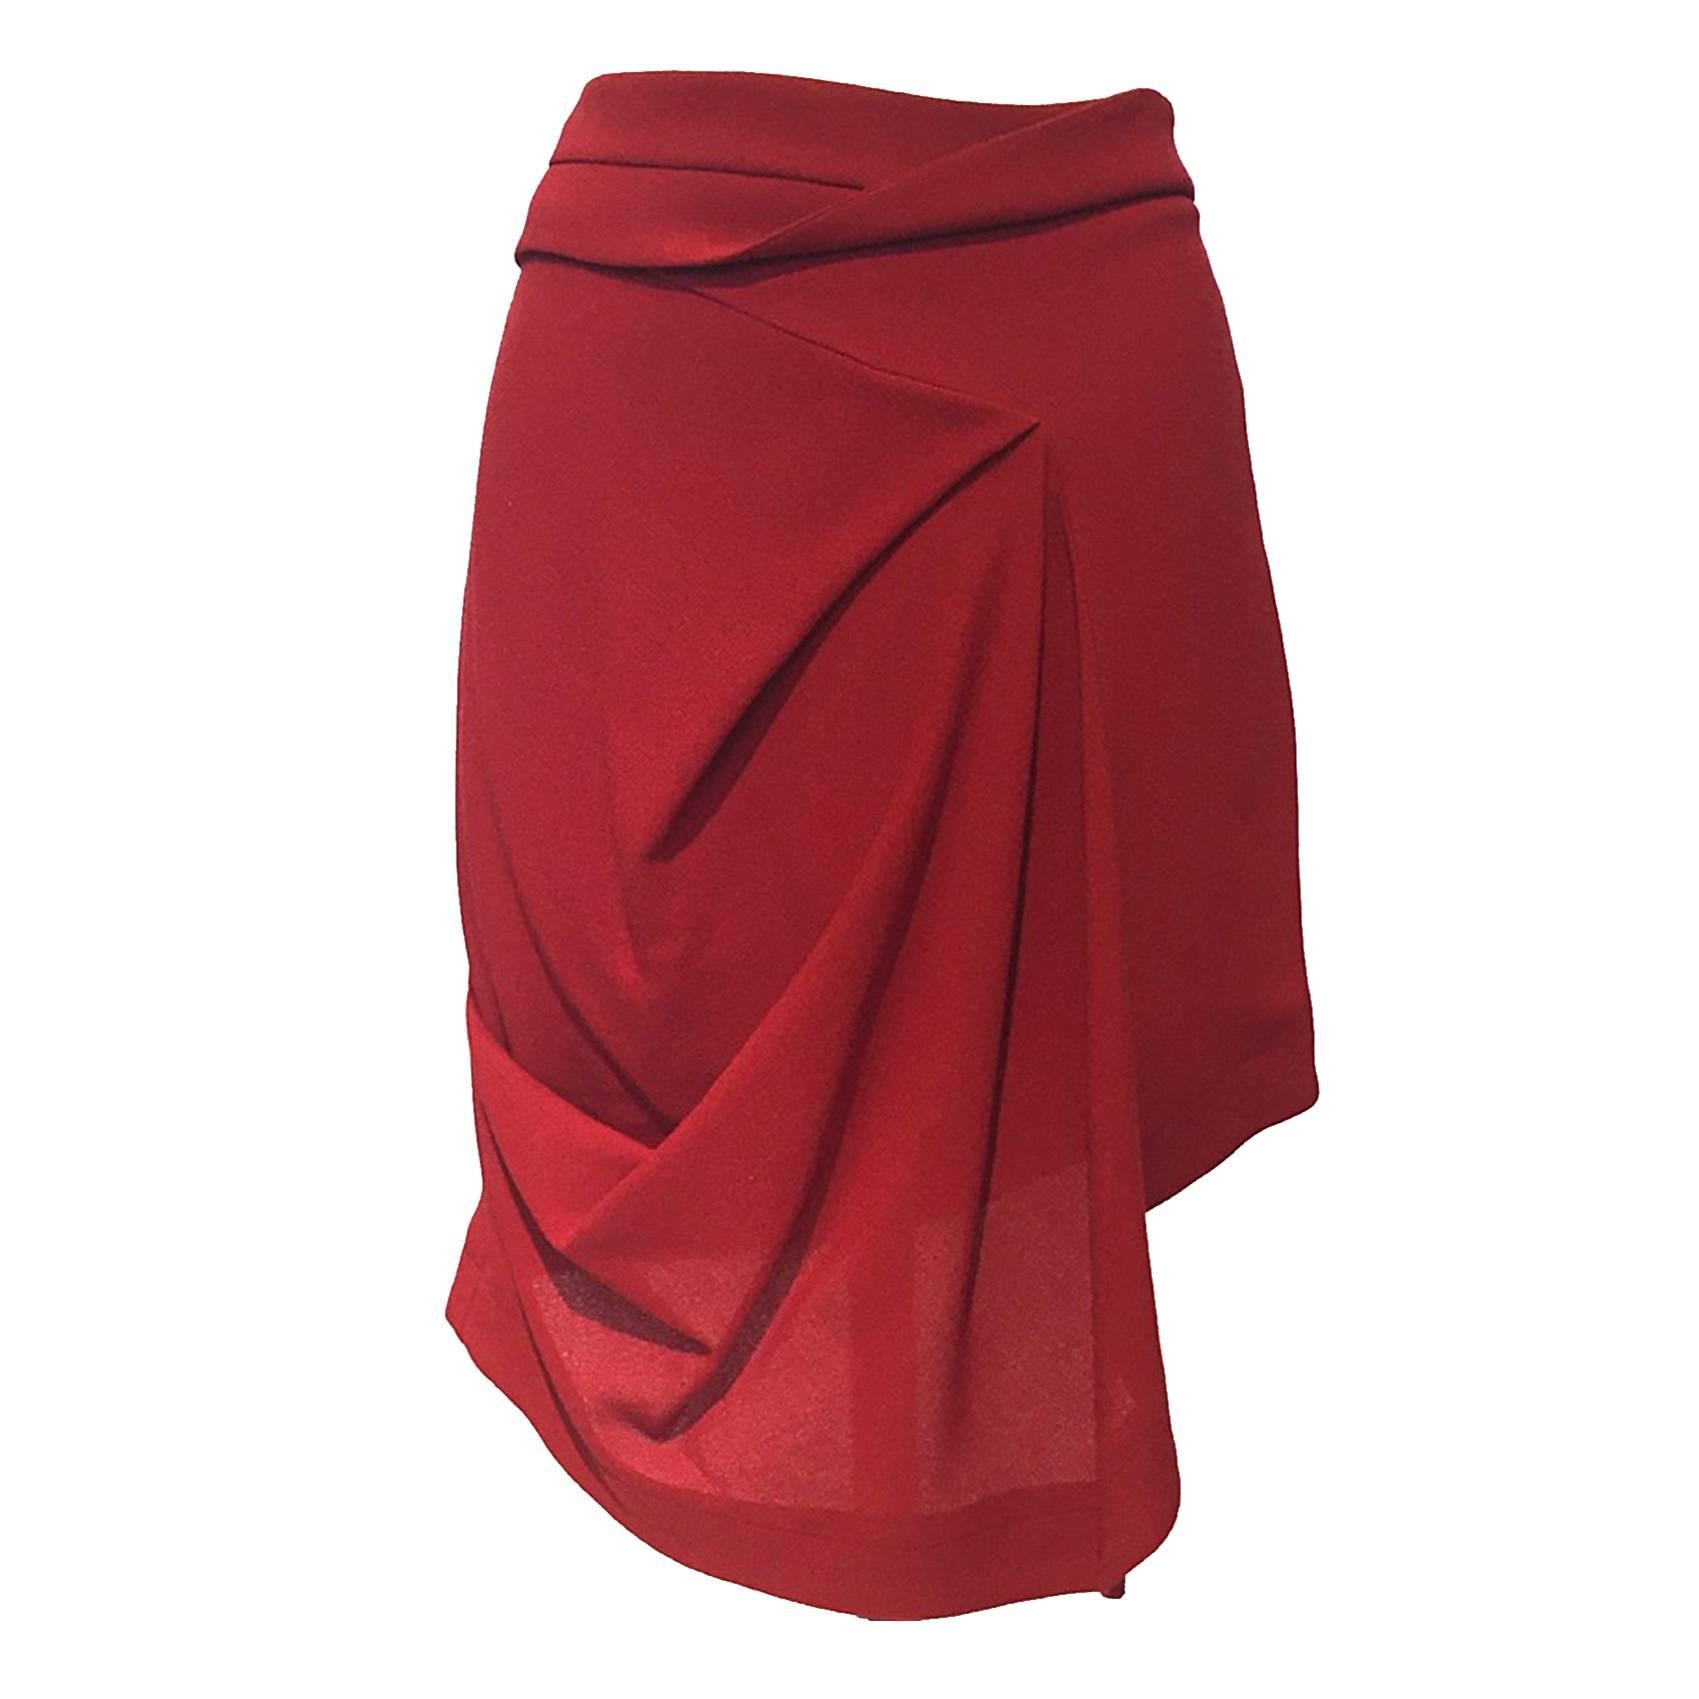 Balenciaga by Nicolas Ghesquiere Rust Skirt with asymmetrical front, Sz. S